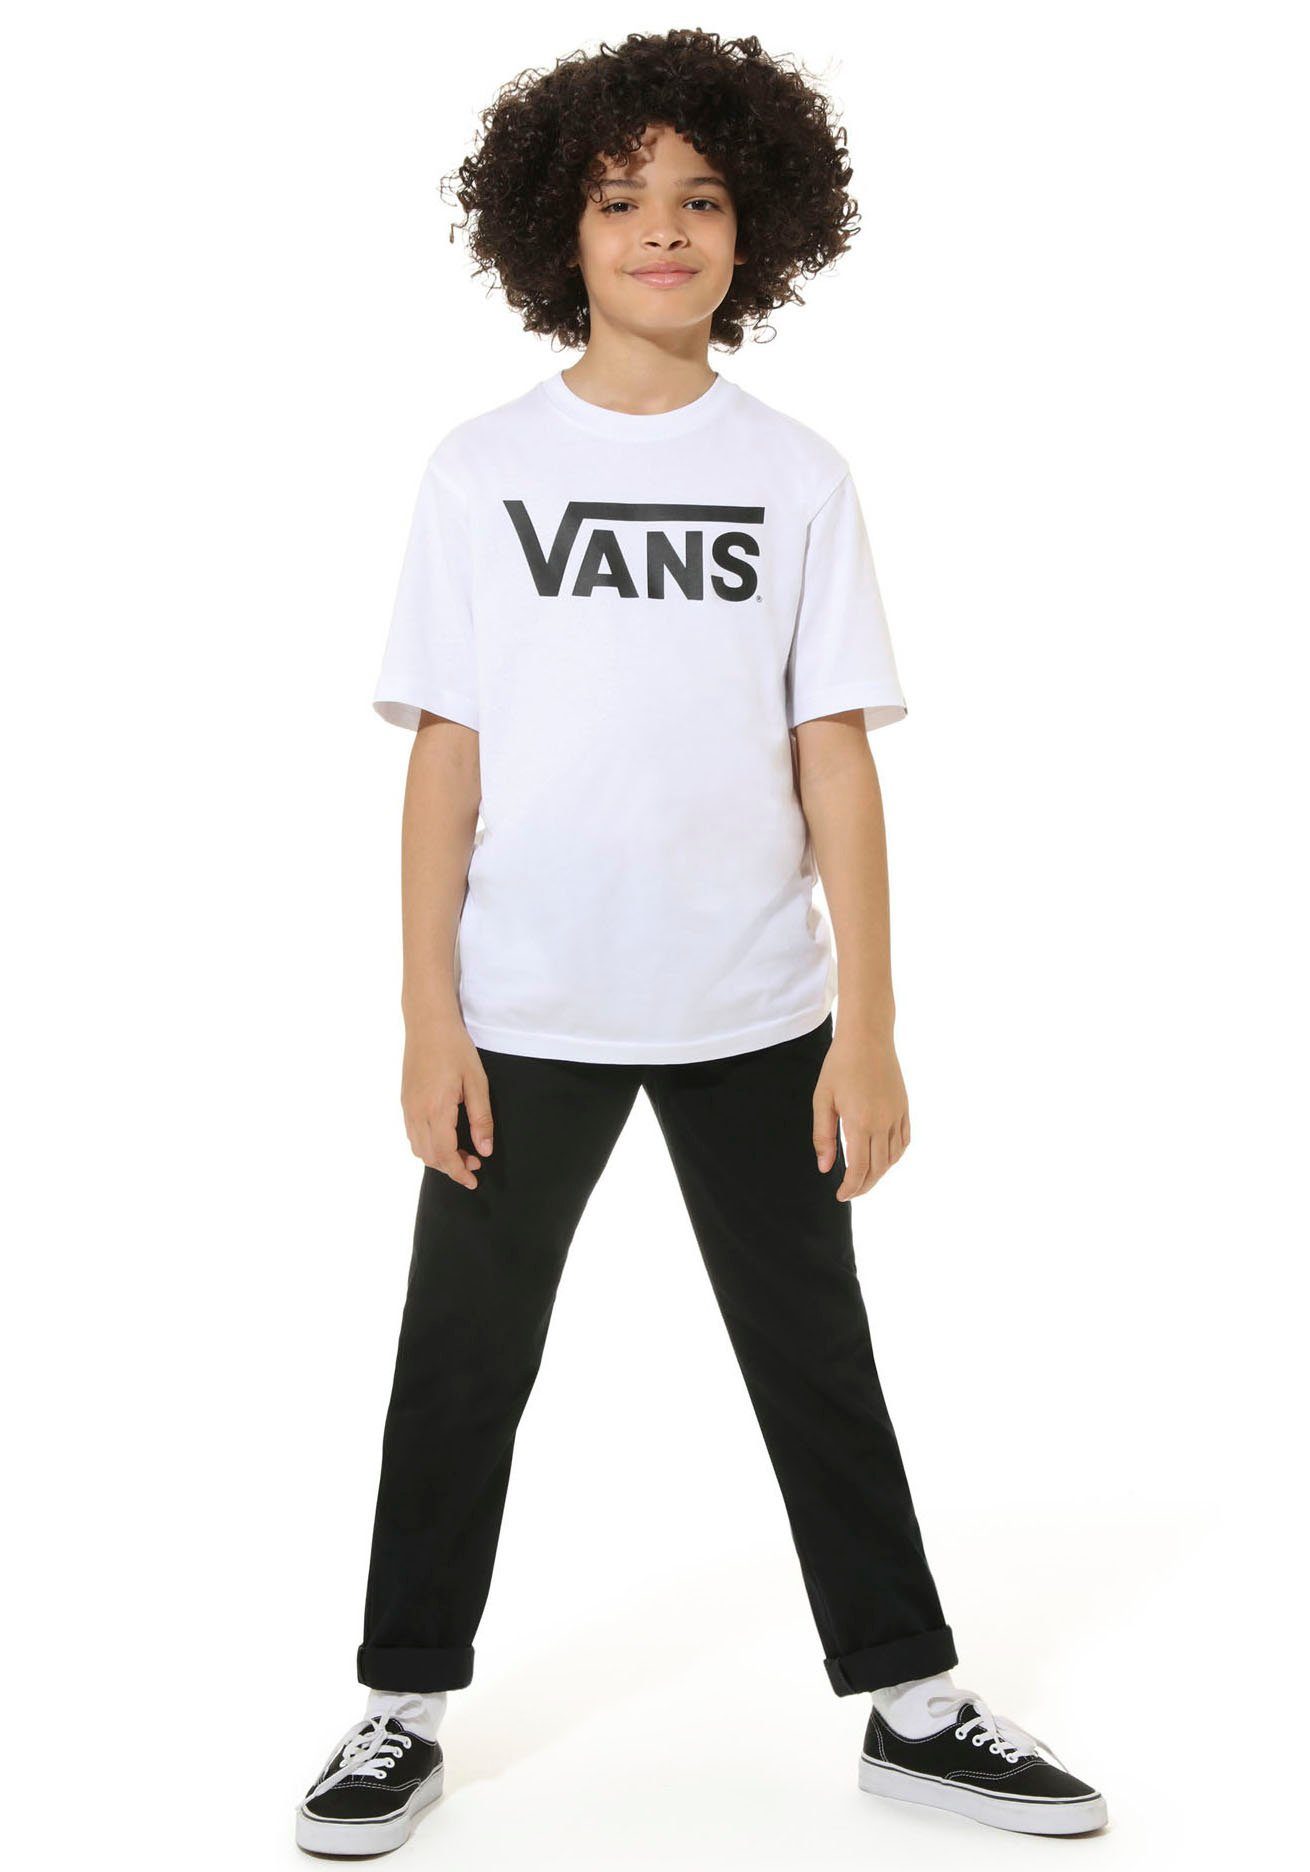 BOYS T-Shirt VANS Vans weiß CLASSIC